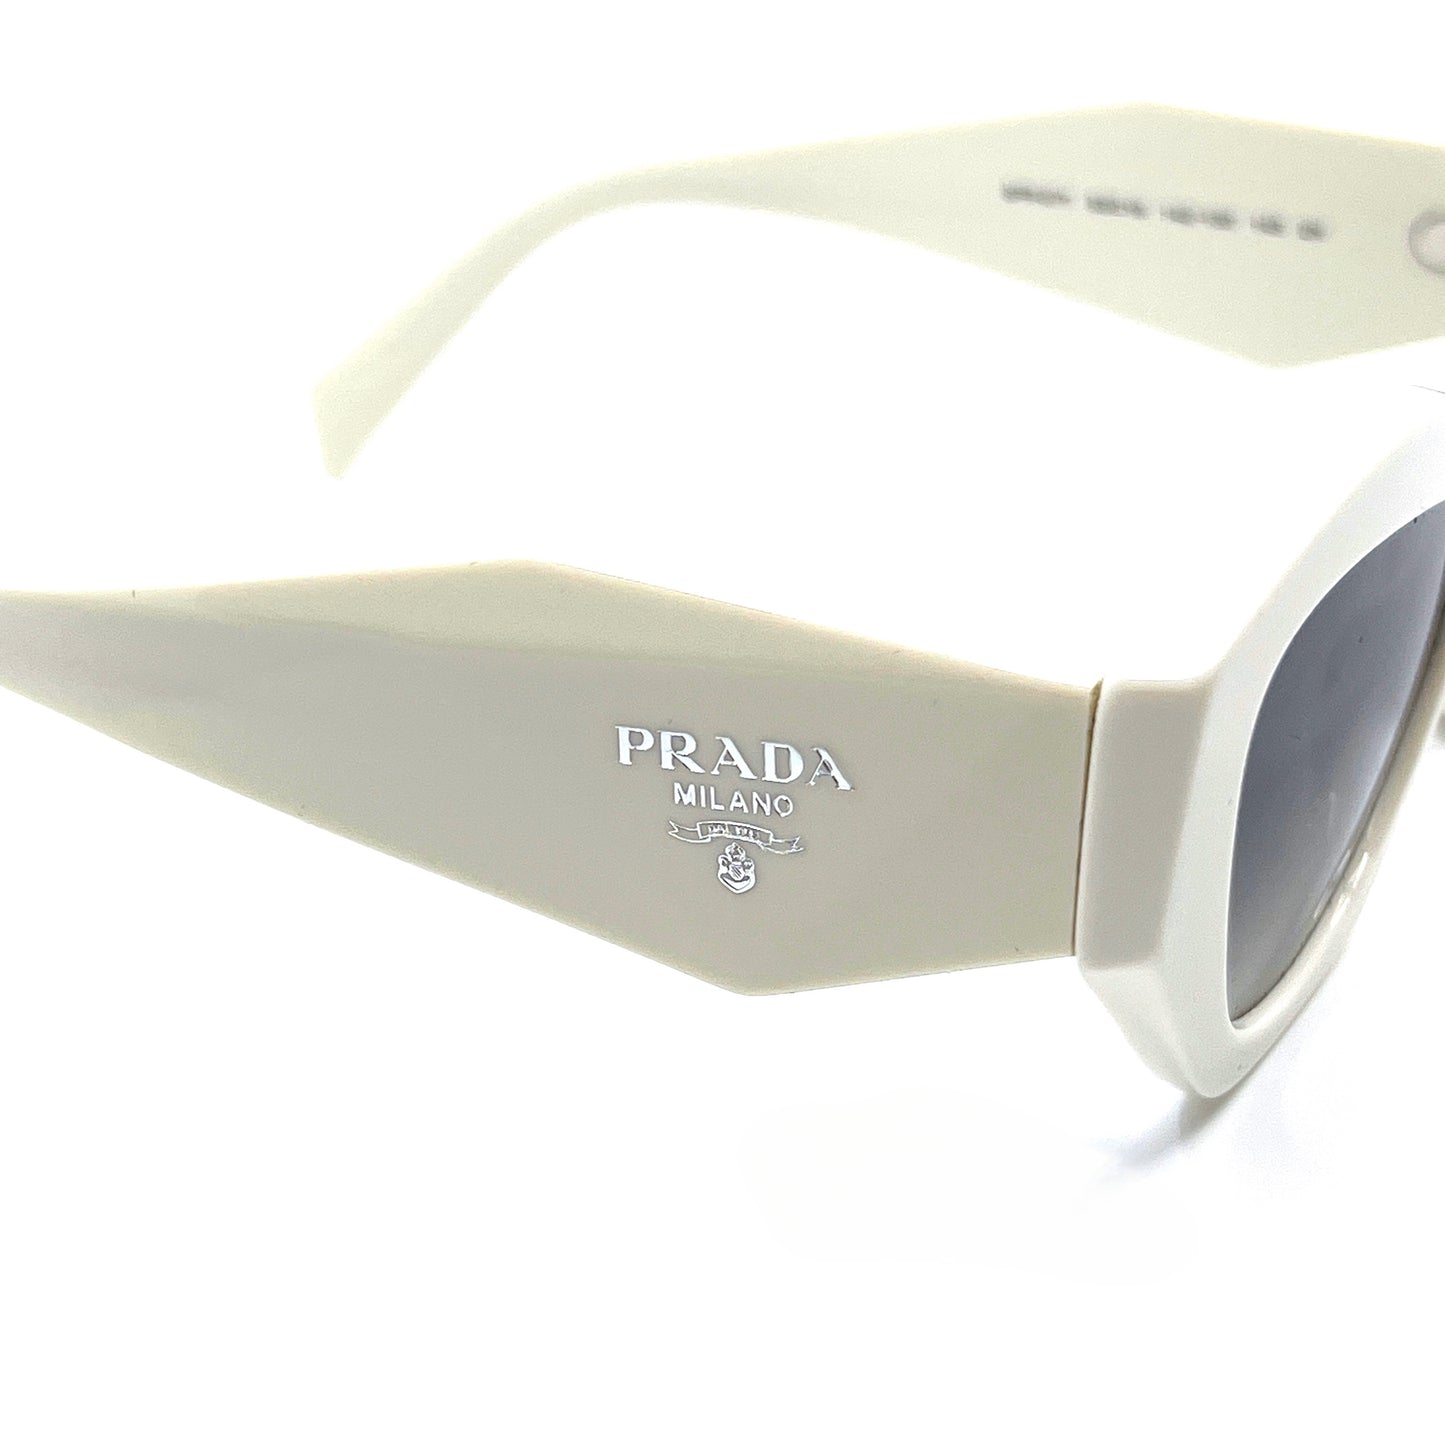 PRADA Sunglasses SPR07Y 142-130